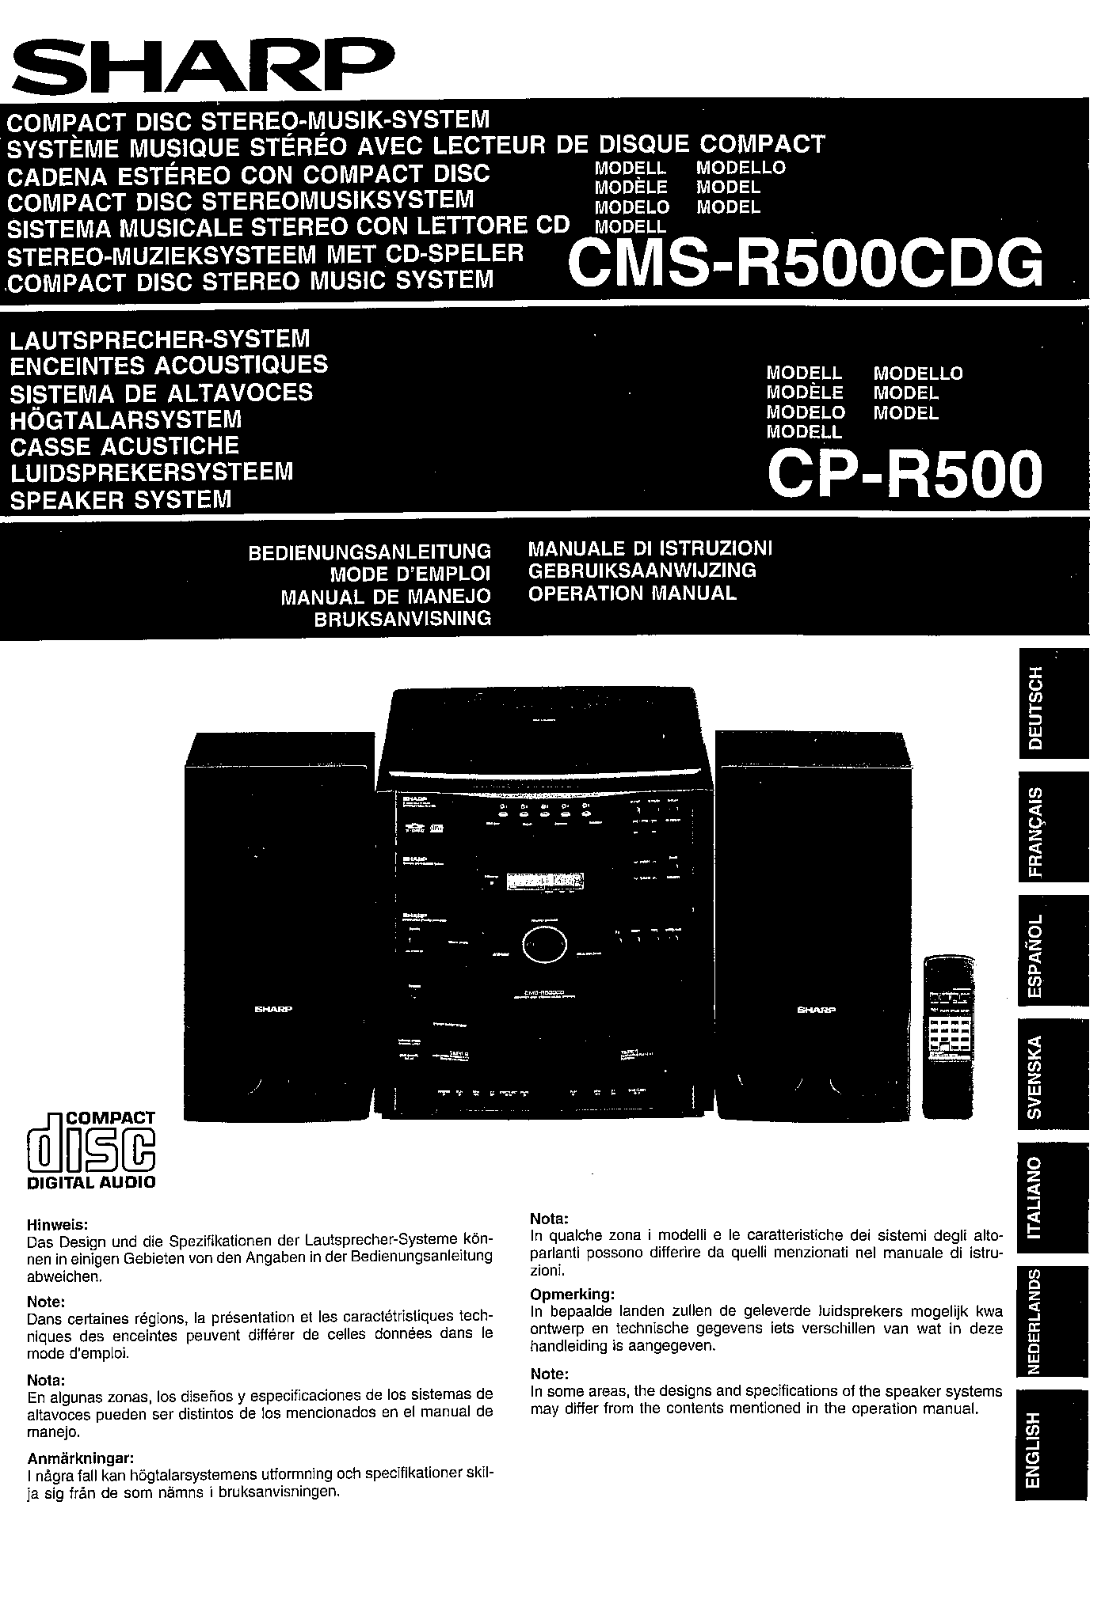 Sharp CMS-R500CDG, CP-R500 Owner Manual